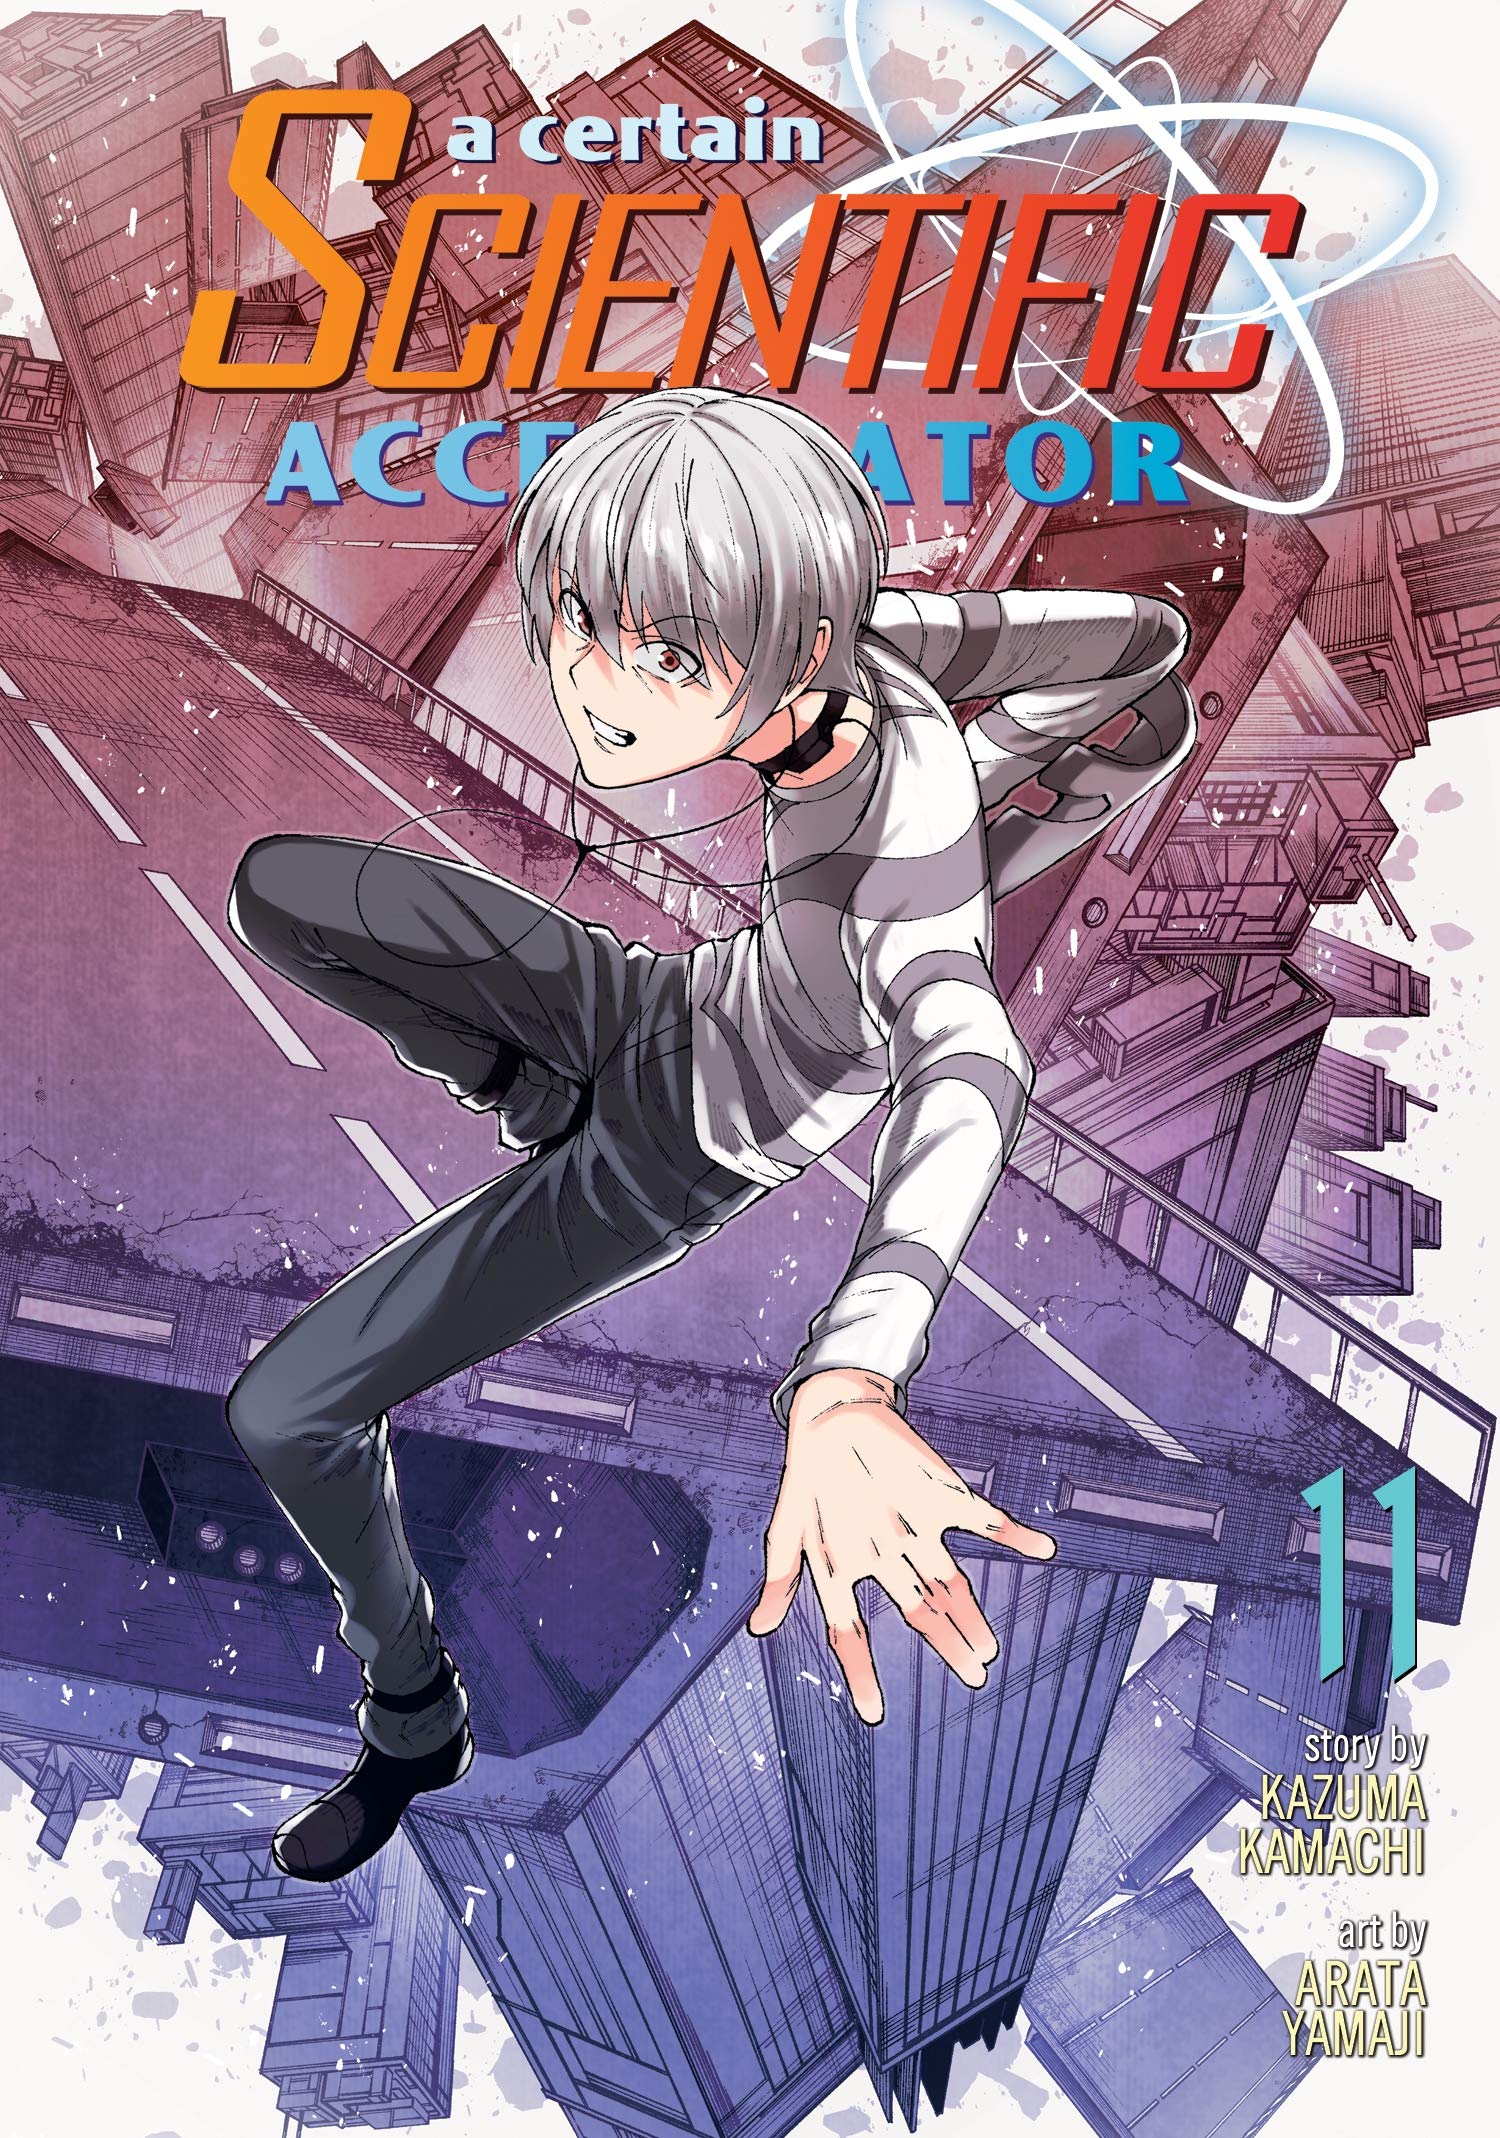 ZeroDS on X: Toaru Kagaku no Accelerator (Manga) Vol.9 – 2018/10/11   / X